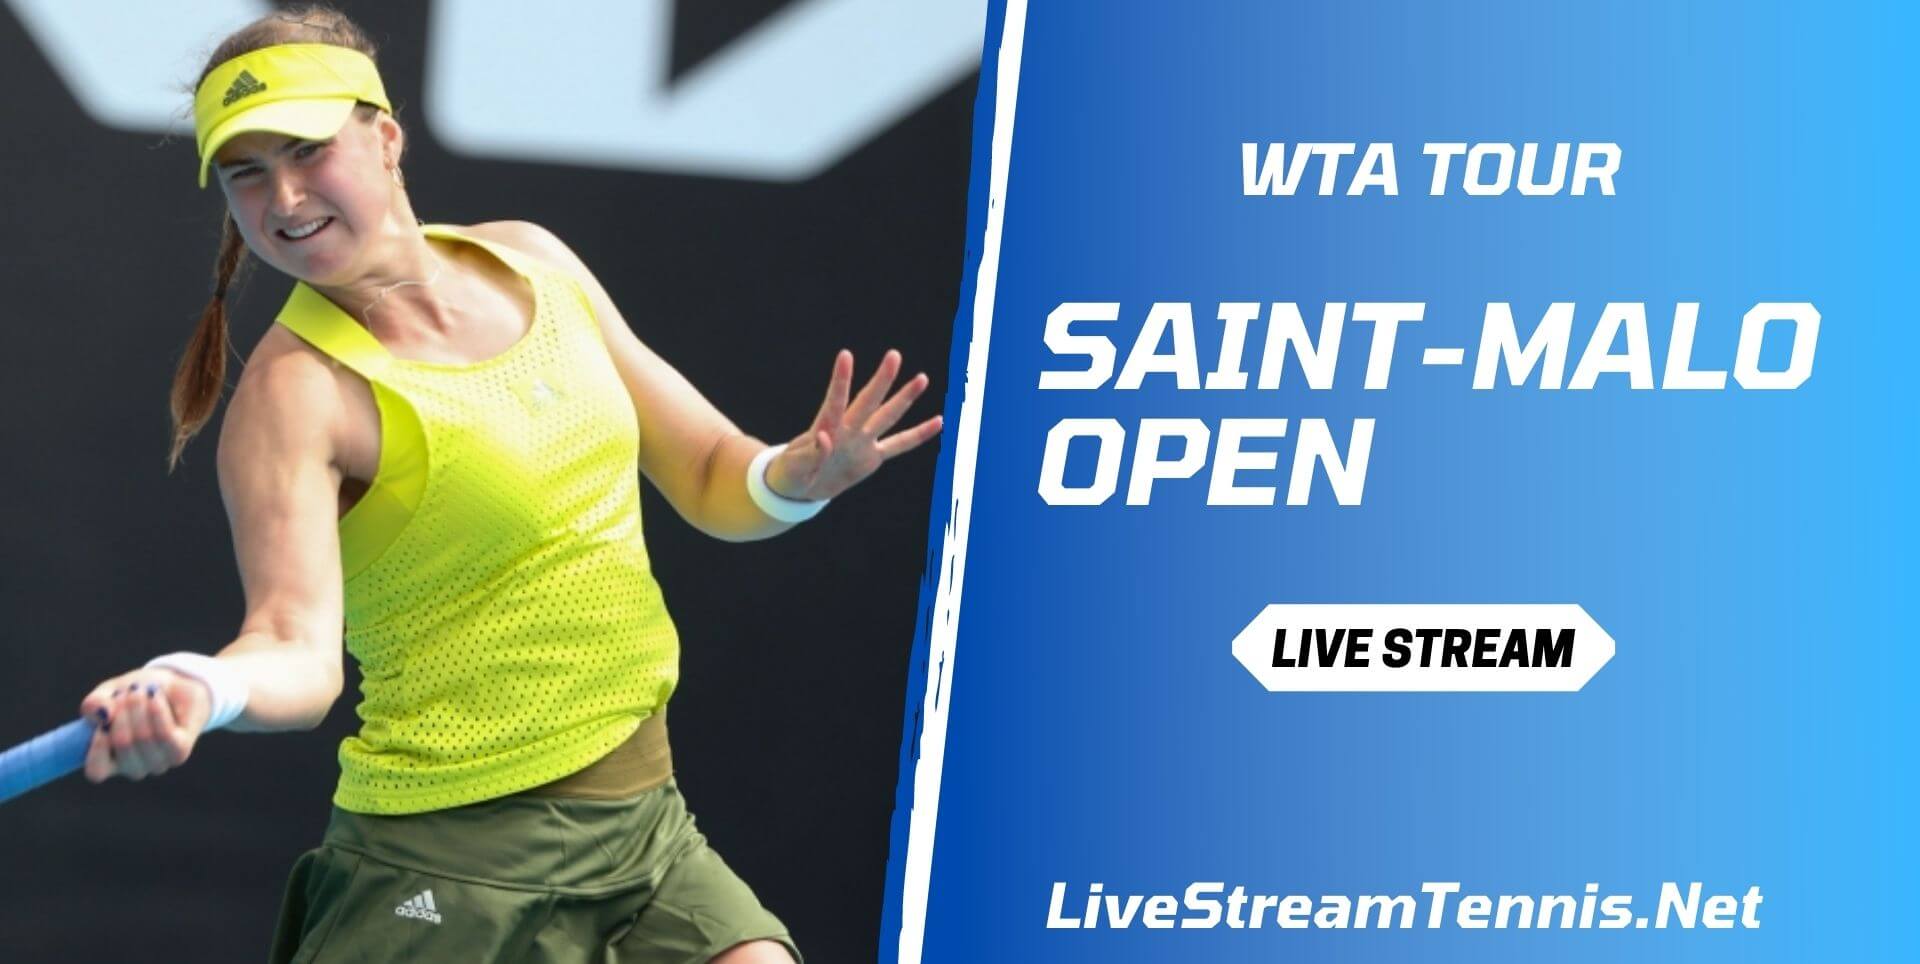 Saint Malo Open Live Stream Tennis WTA